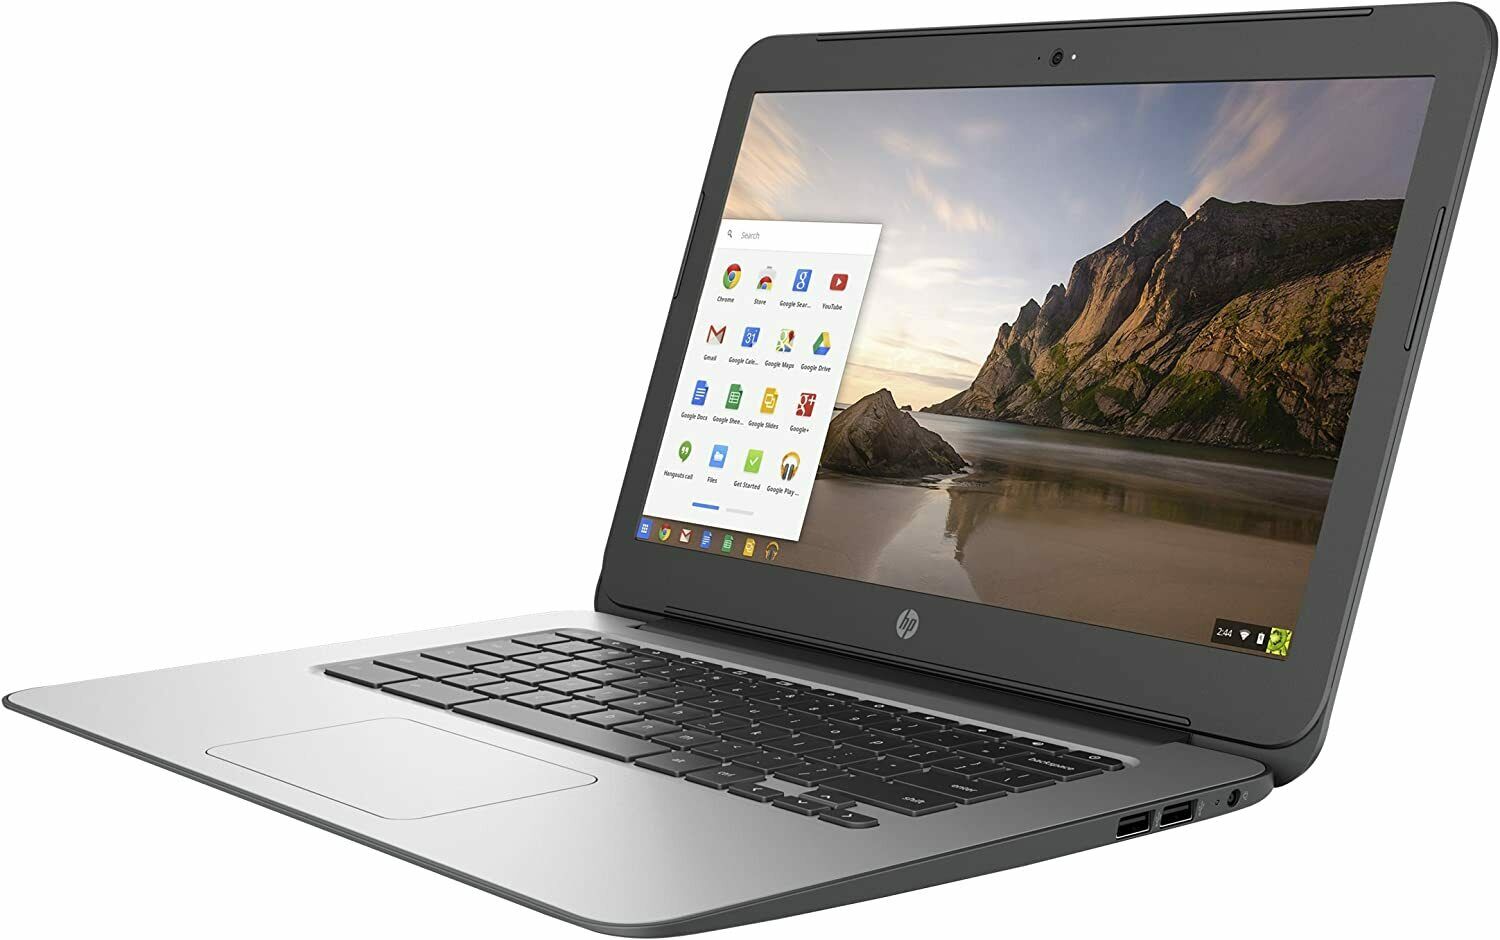 HP Chromebook 14" Laptop Intel Celeron N2840 Processor 2.16GHz 4GB/16GB, T4M32UT